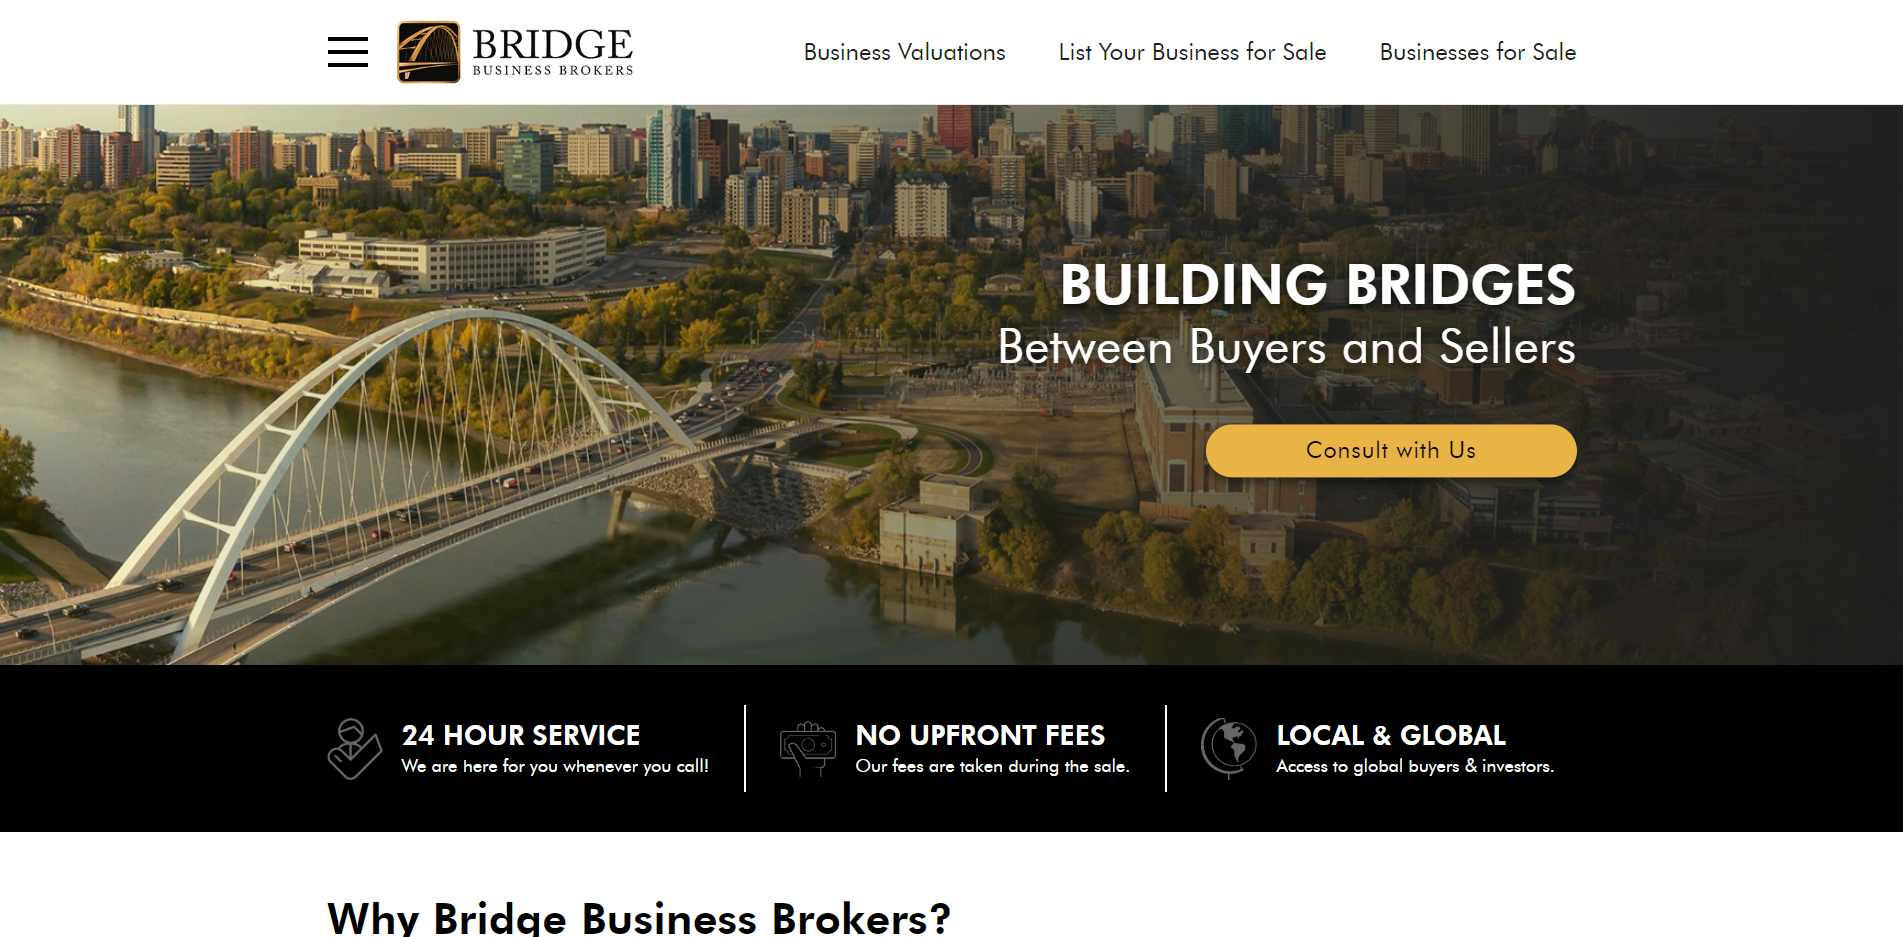 Bridge Business Brokers image